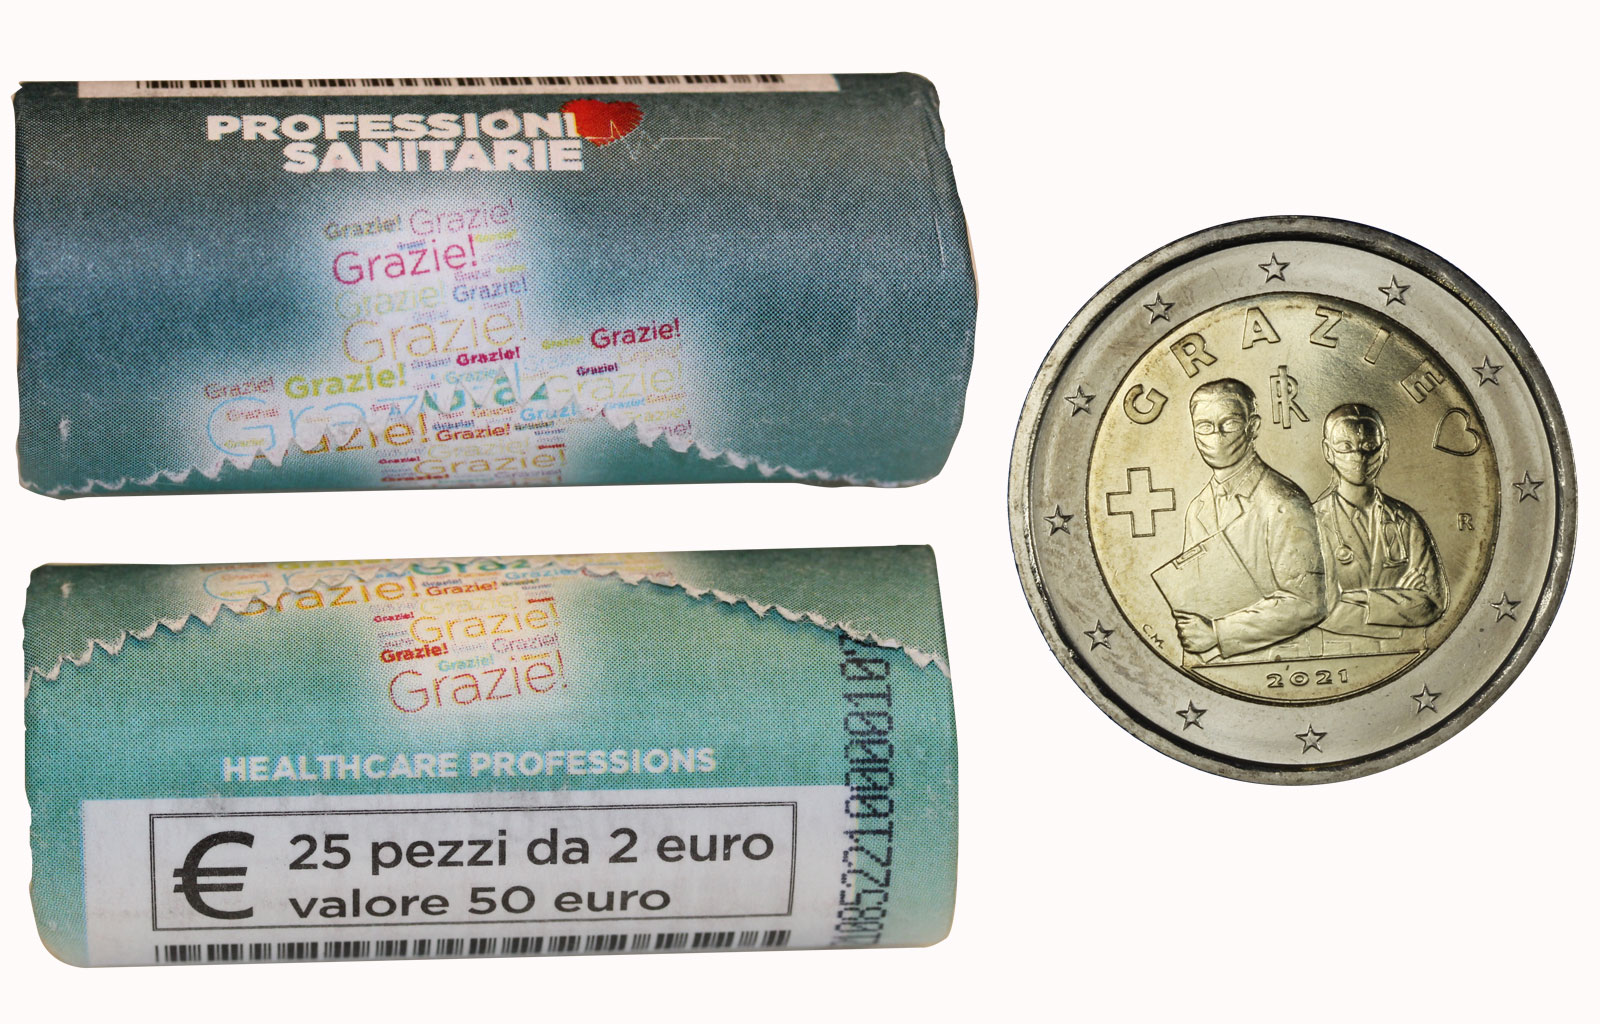 "Professioni Sanitarie" - moneta da 2 euro in rotolino da 25 pezzi